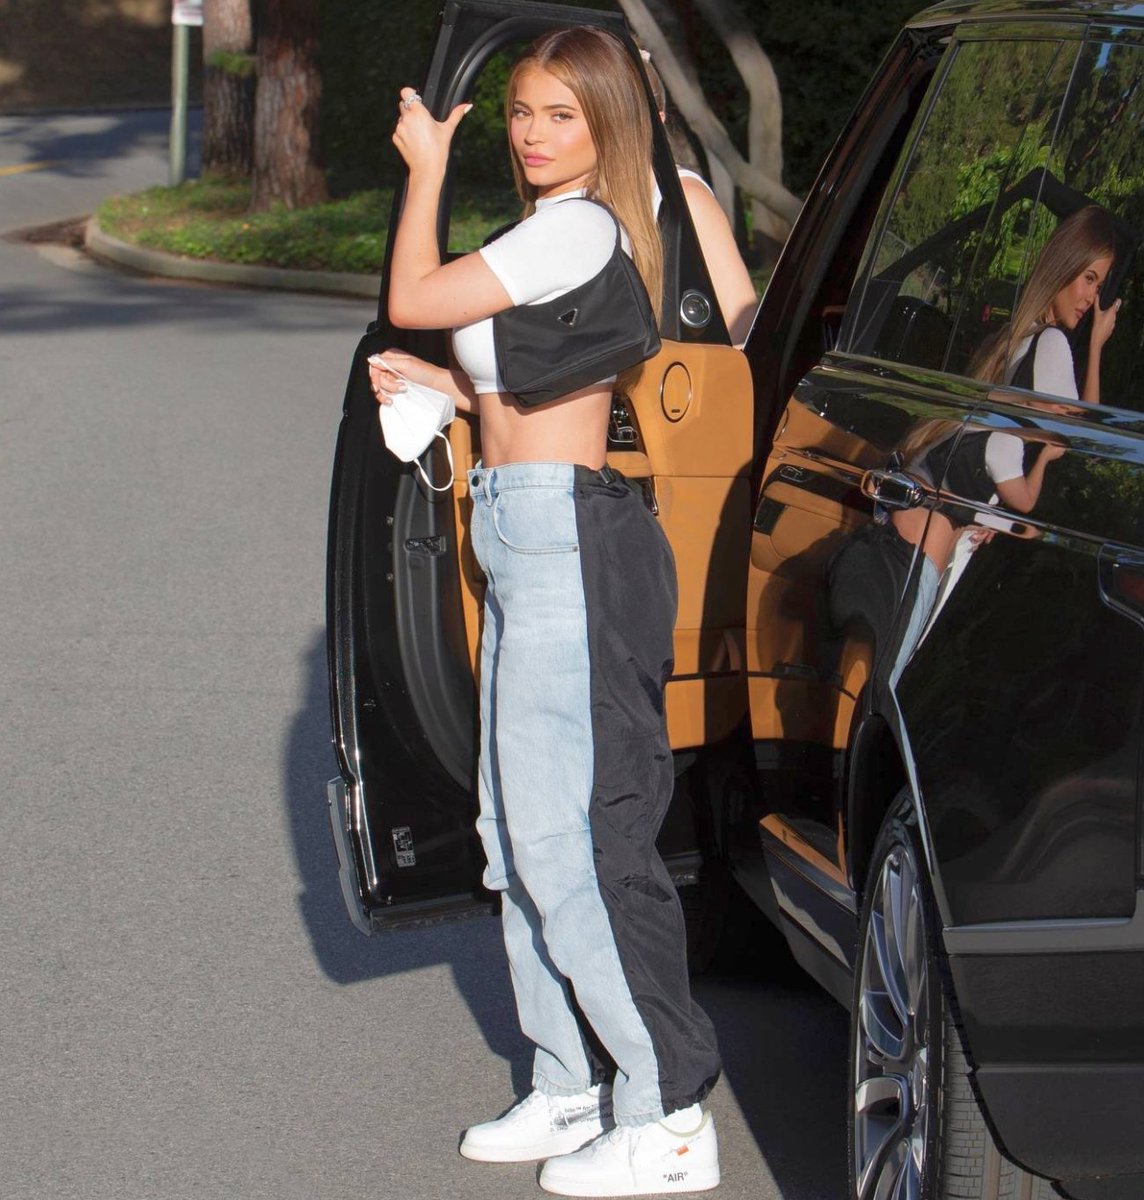 Fremskynde Produkt Sædvanlig Denimology on X: "Kylie Jenner in Alexander Wang Mix Media Jeans -  https://t.co/R09Hl1orqF @kyliejenner spotted out in #losangeles wearing  @alexanderwang #jeans #hirisejeans @nike #sneakers #croppedtop  #celebritylook in #denim https://t.co/msLBk99lIi" / X